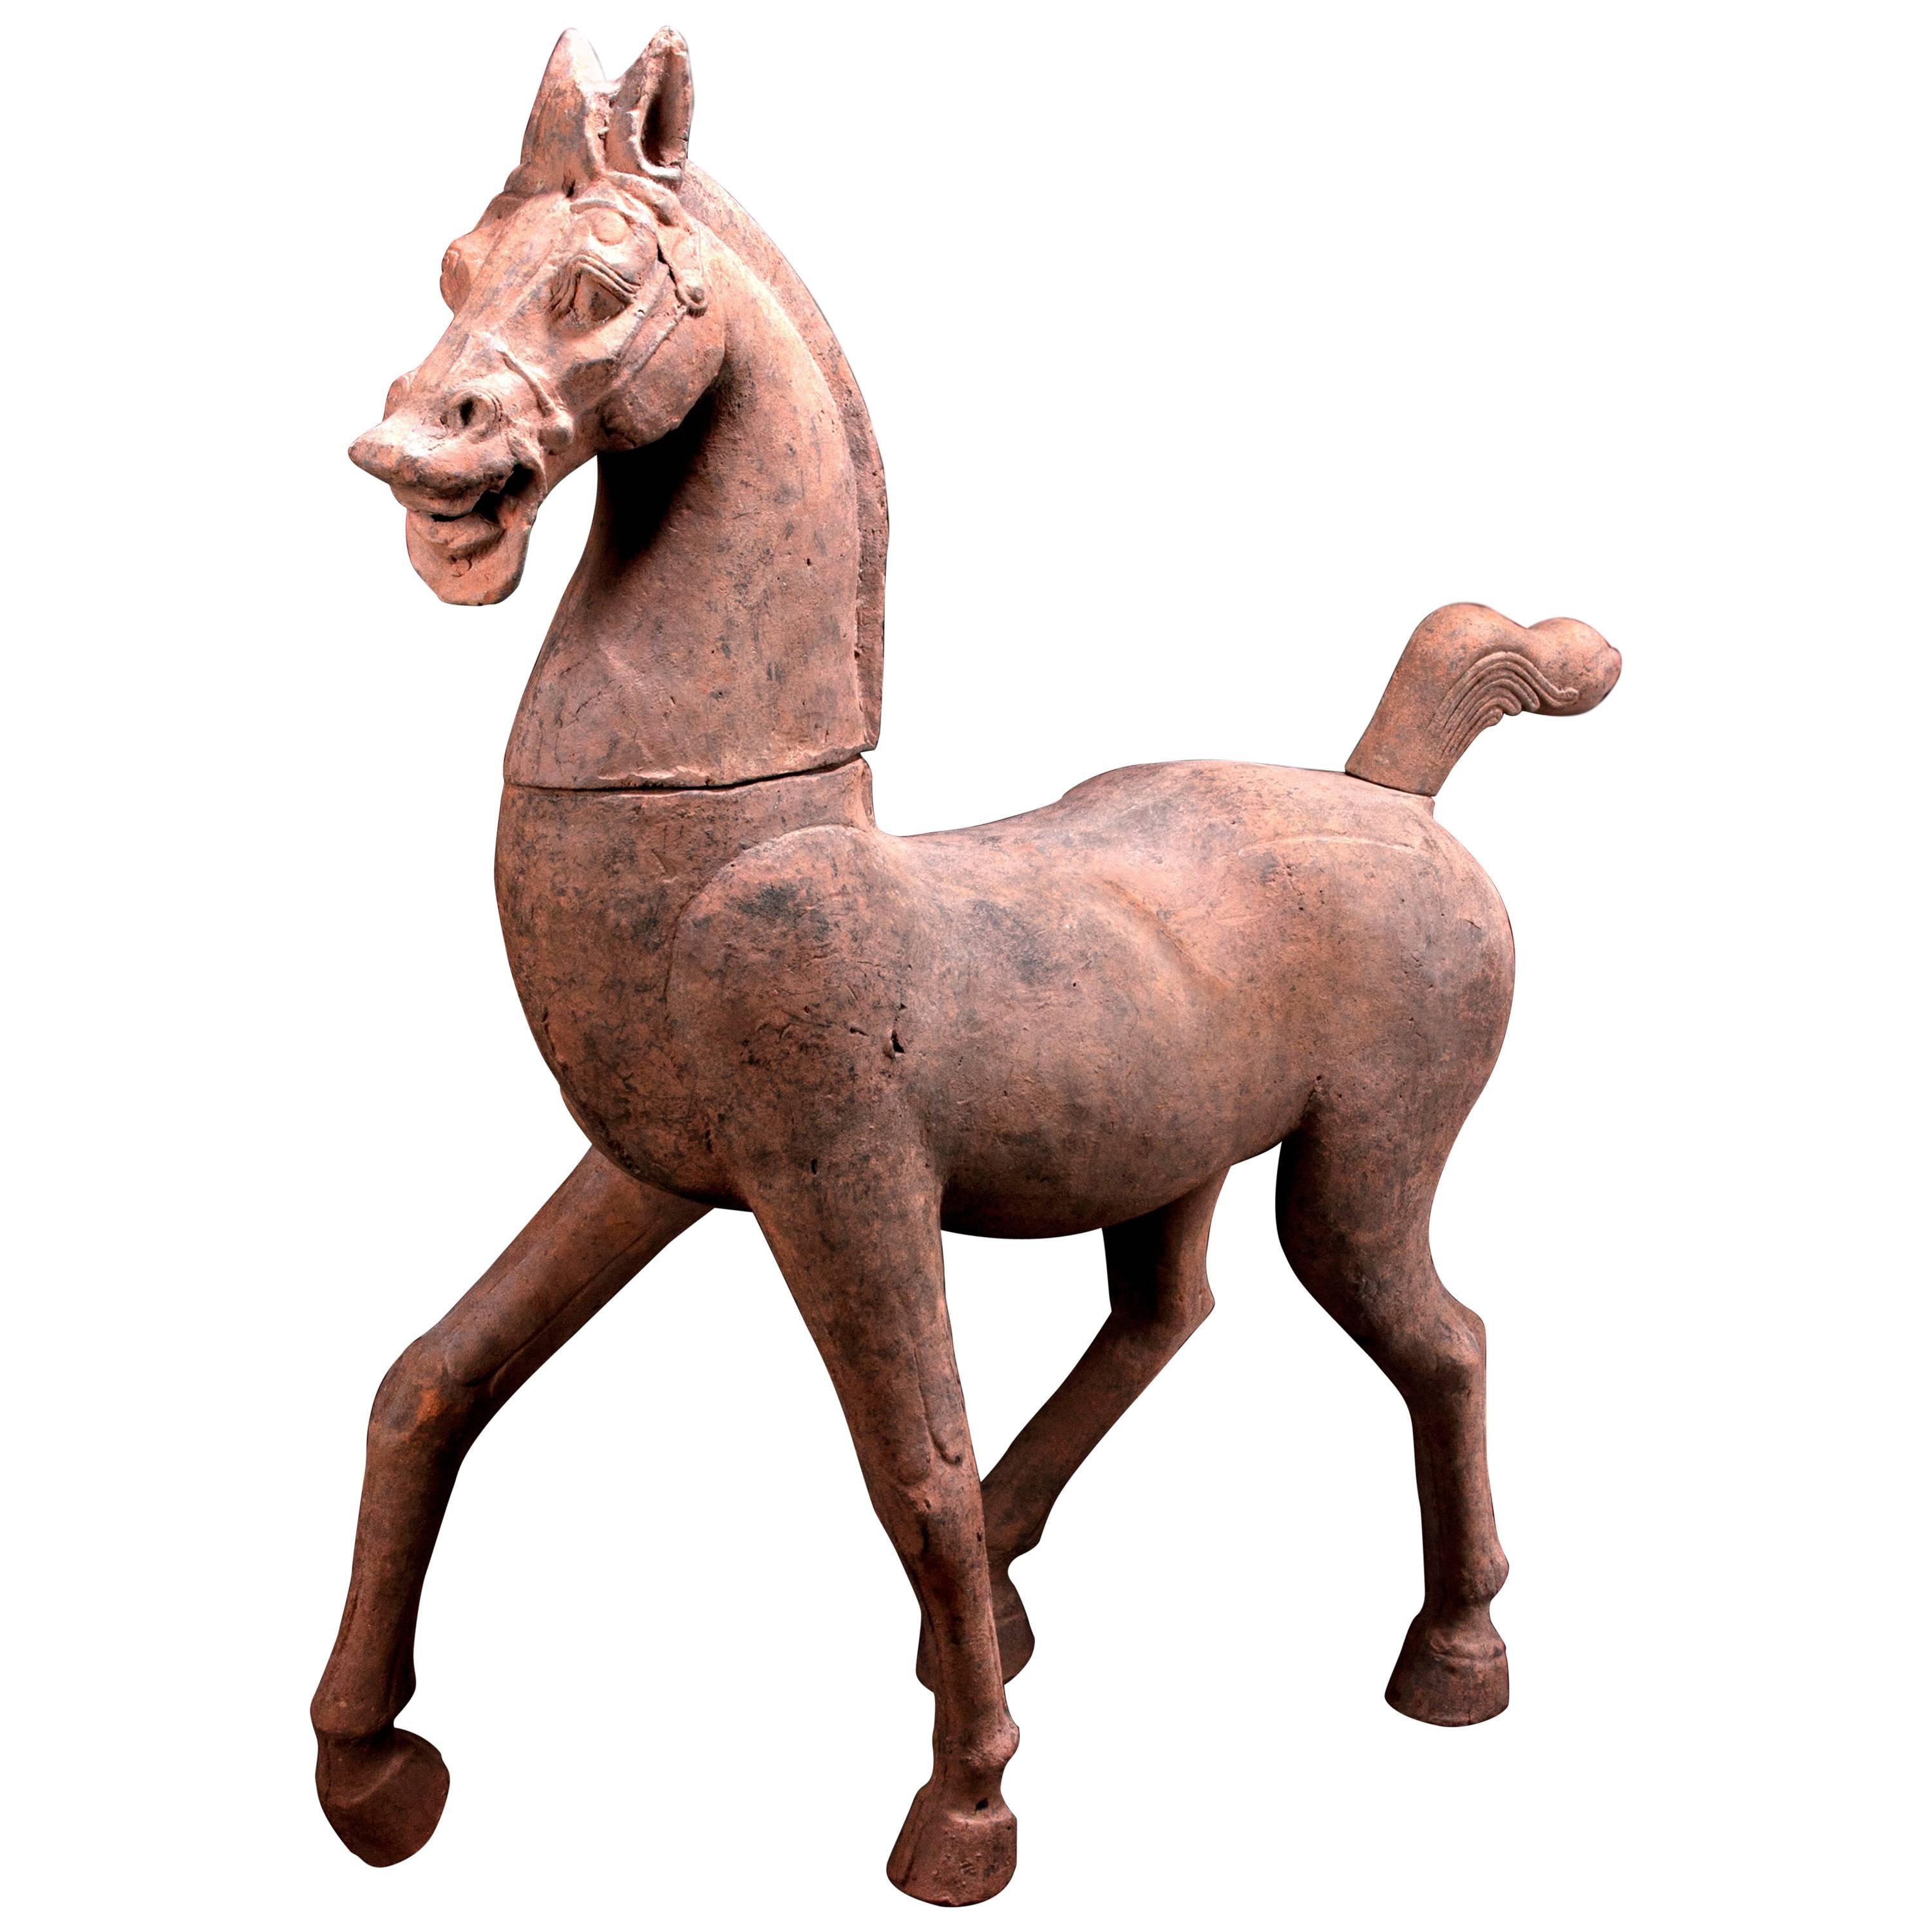 Monumentales Terrakotta-Pferd aus der Han Dynasty - TL-geprüft - China, '206 v. Chr. - 220 n. Chr.'.